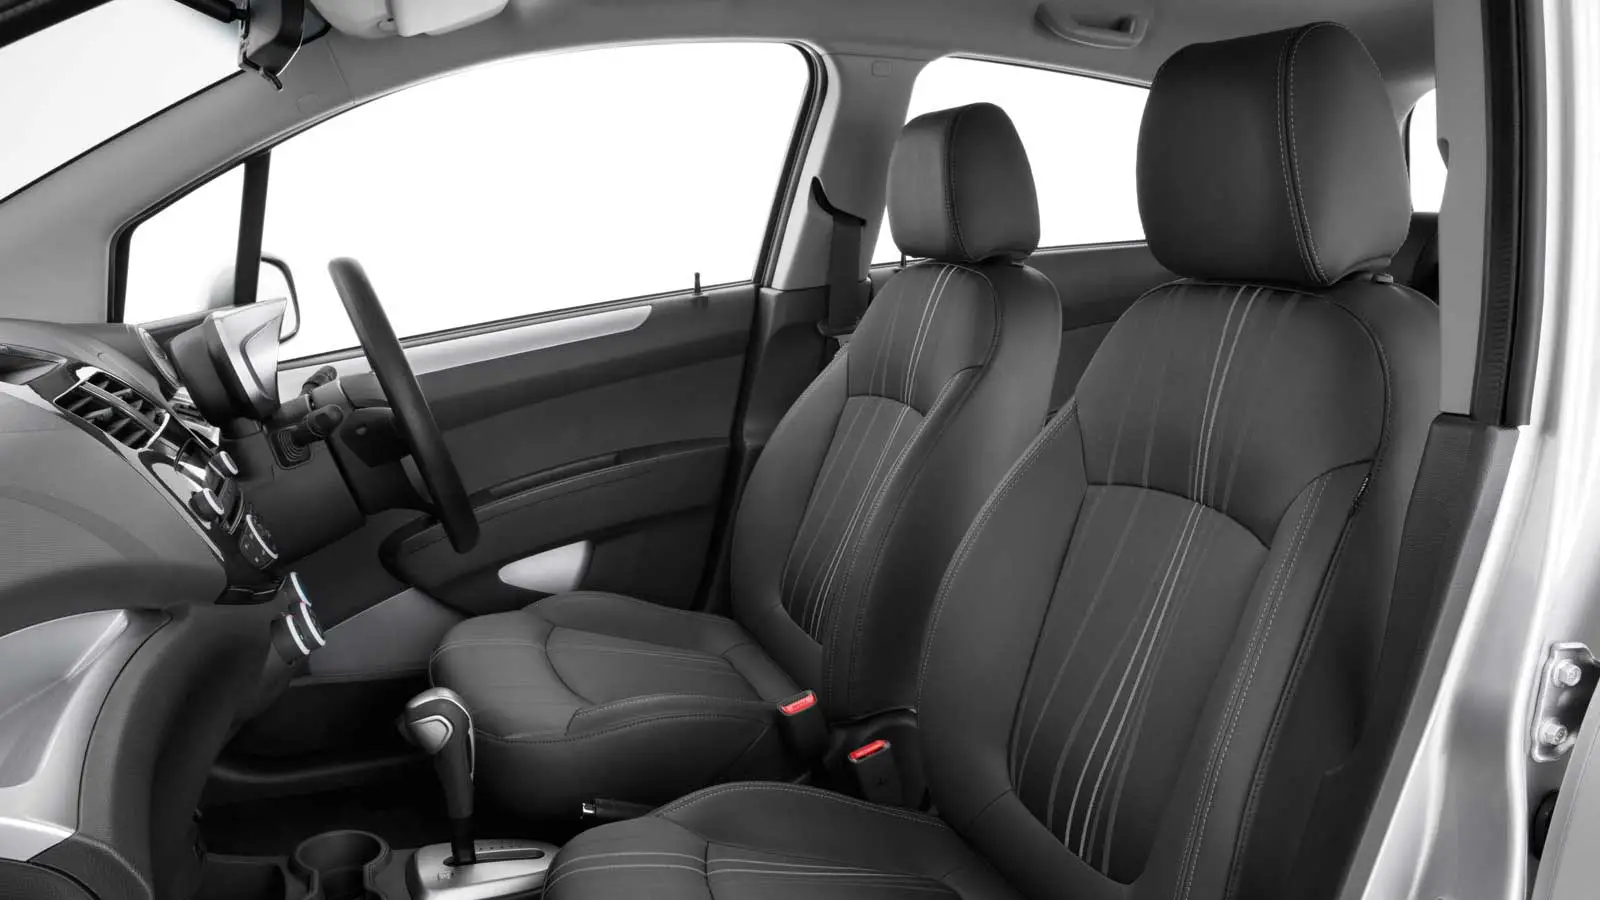 Holden Barina Spark Interior seats